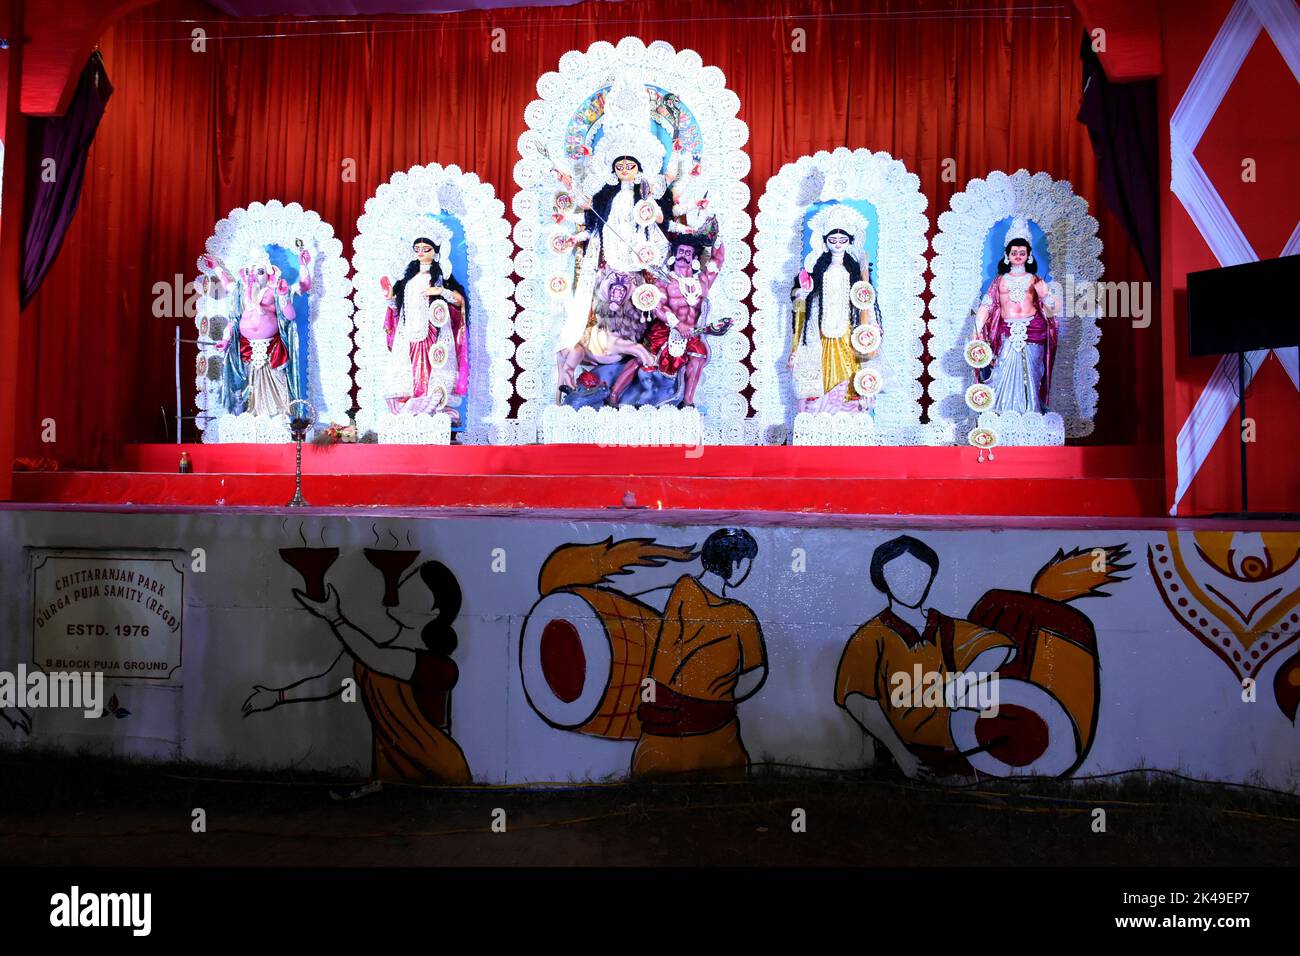 1 octobre 2022, New Delhi, Delhi, Inde: Beau travail d'art à Durga Puja Pandal dans le parc de Chittaranjan. (Image de crédit : © Indraneel Sen/Pacific Press via ZUMA Press Wire) Banque D'Images